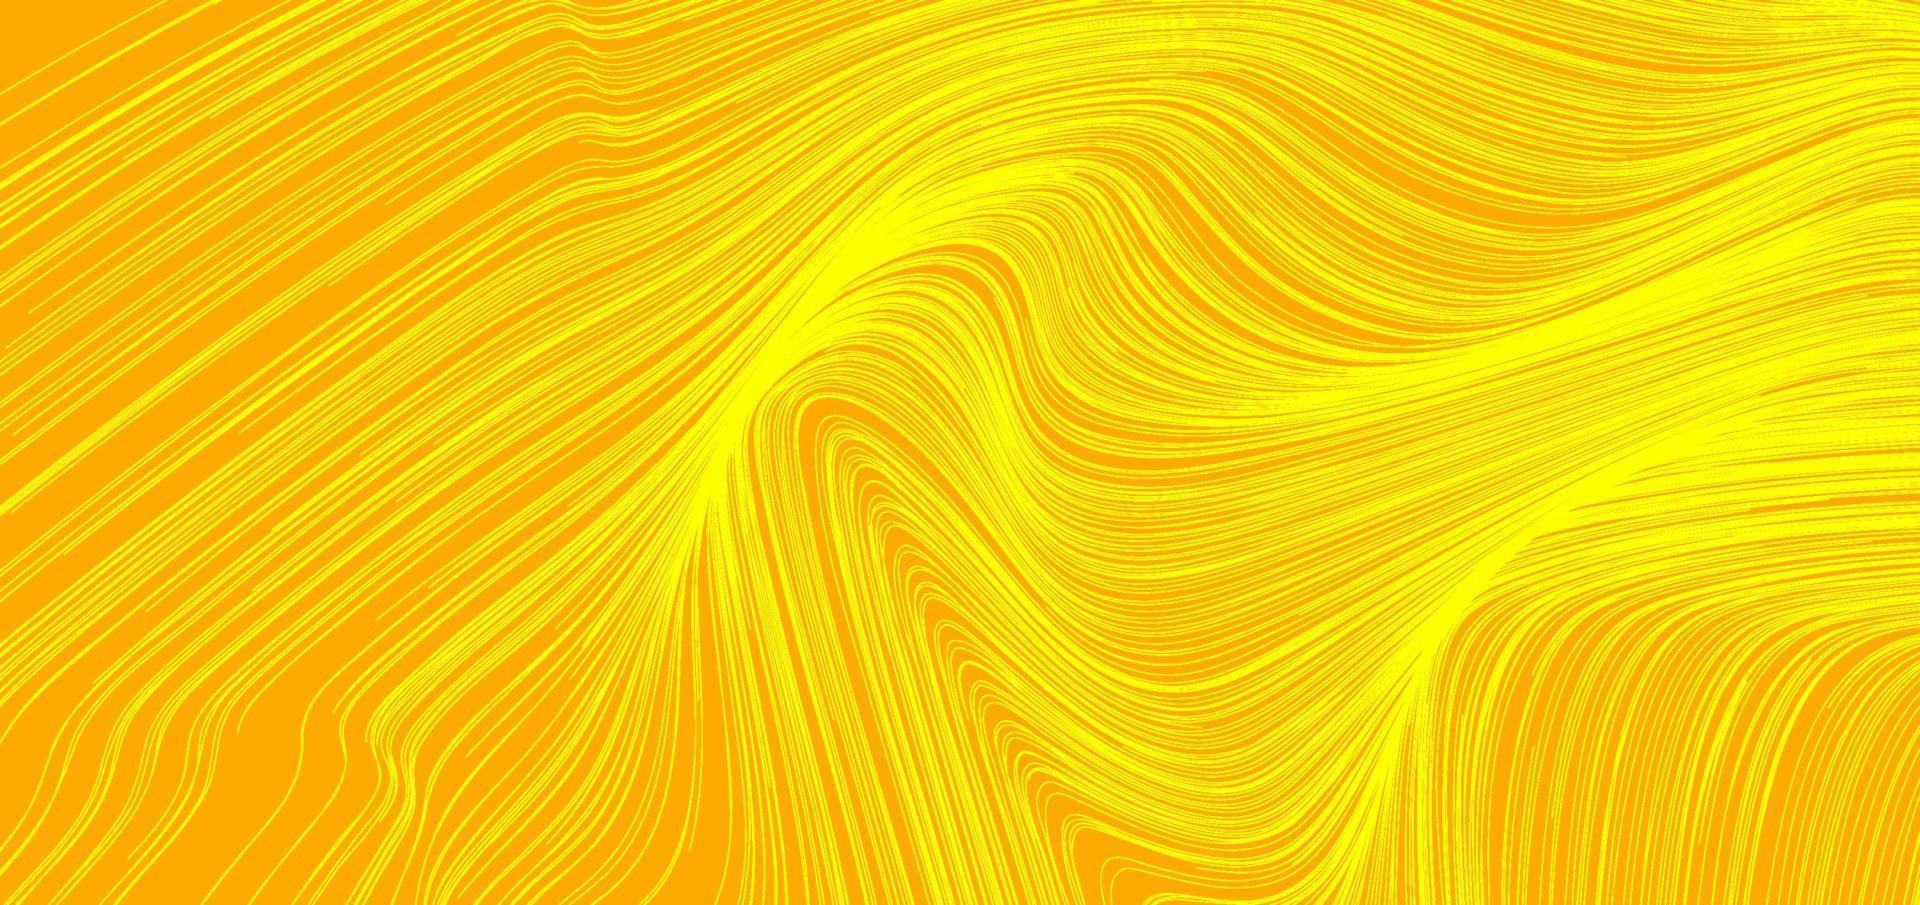 abstracte gele golf of golvende lijnentextuur achtergrond. vector